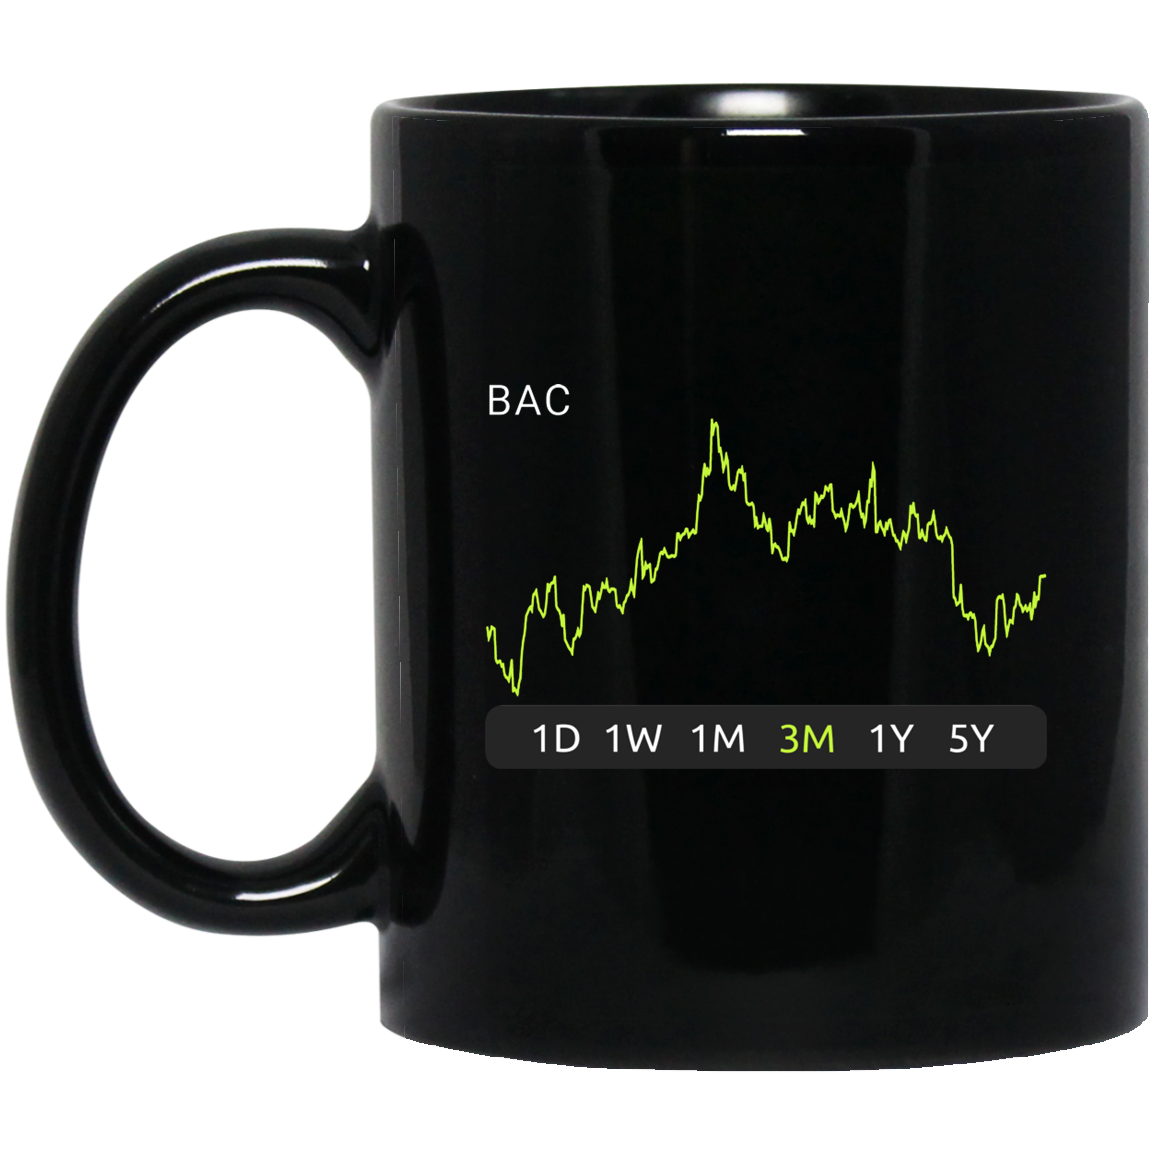 BAC Stock 3m Mug